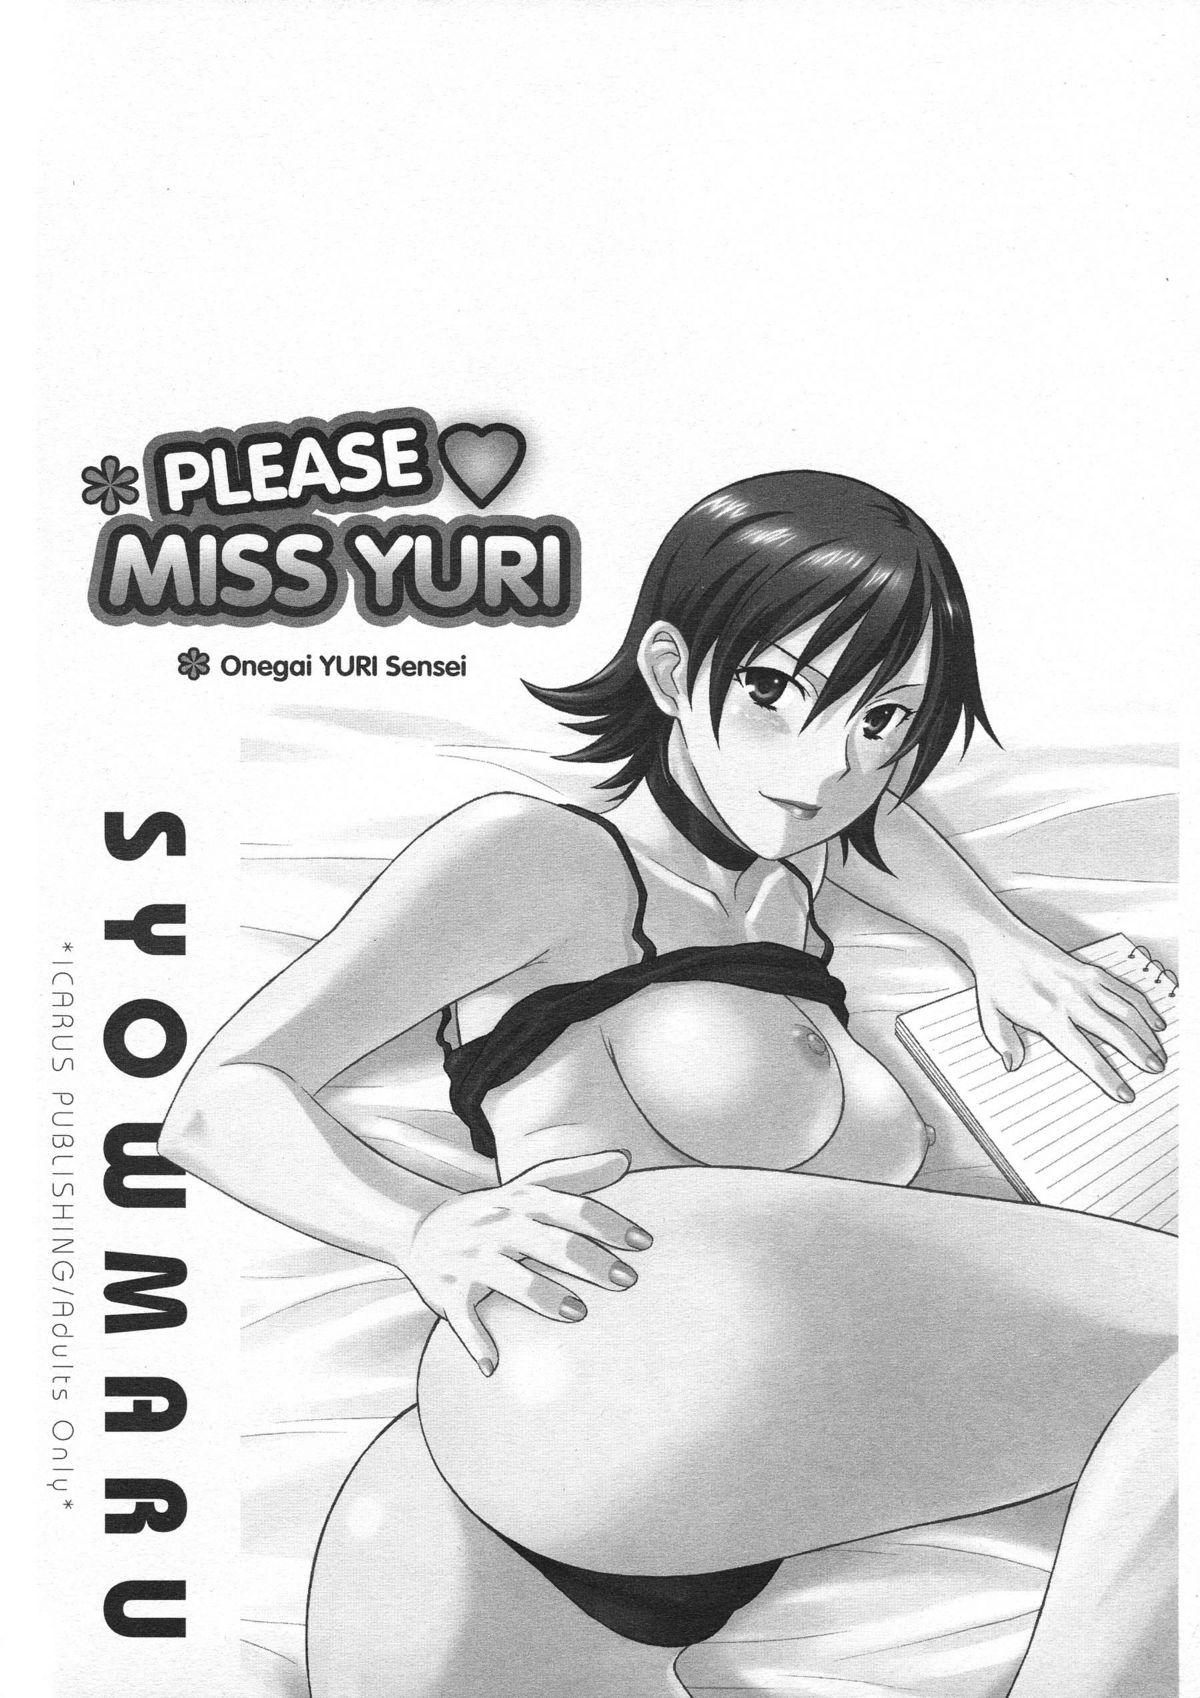 Onegai Yuri Sensei - Please Miss Yuri. 185